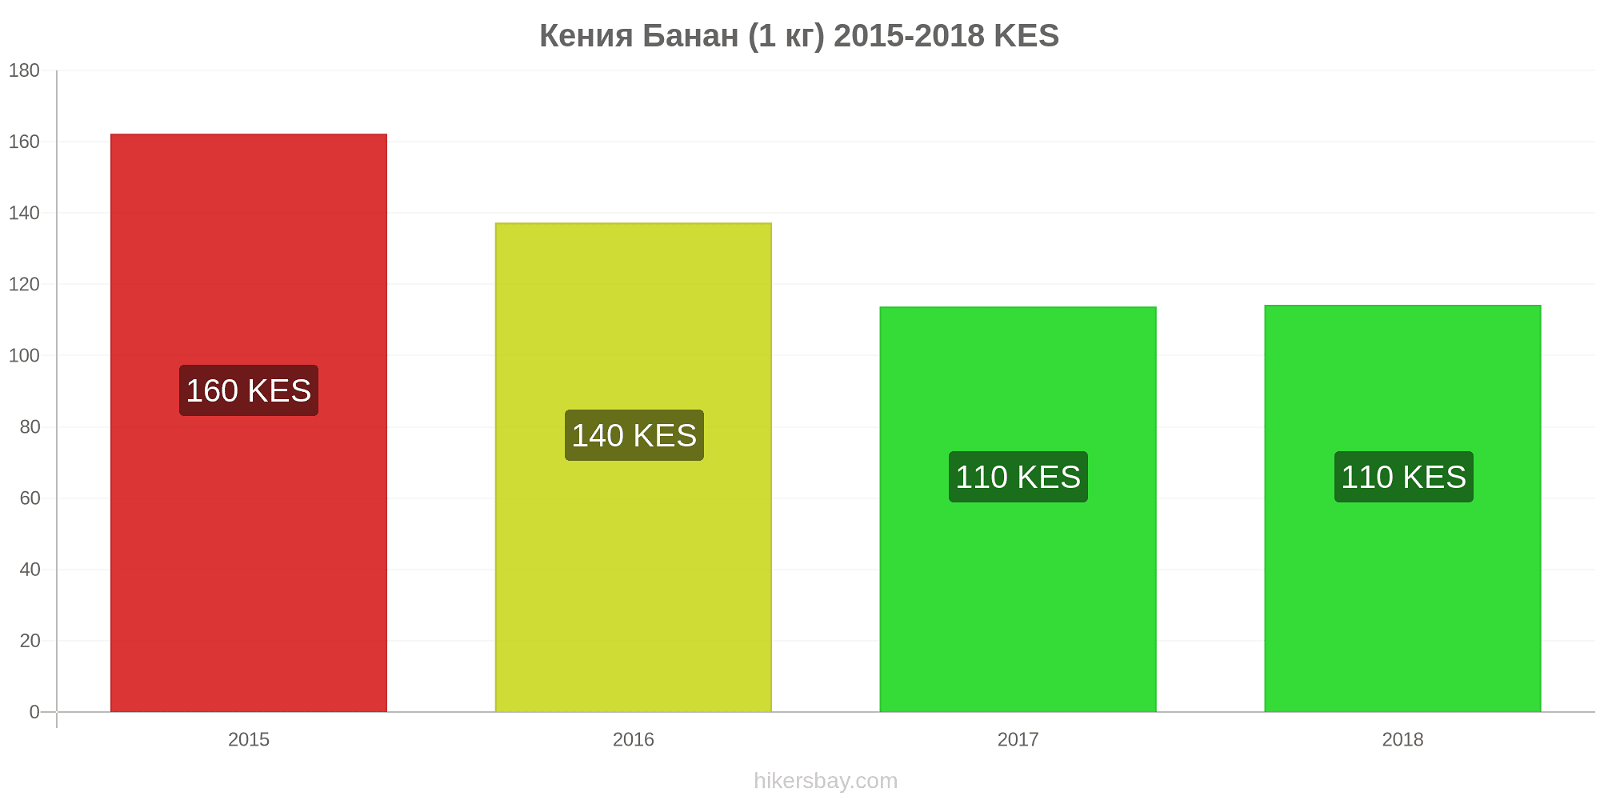 Кения изменения цен Бананы (1 кг) hikersbay.com